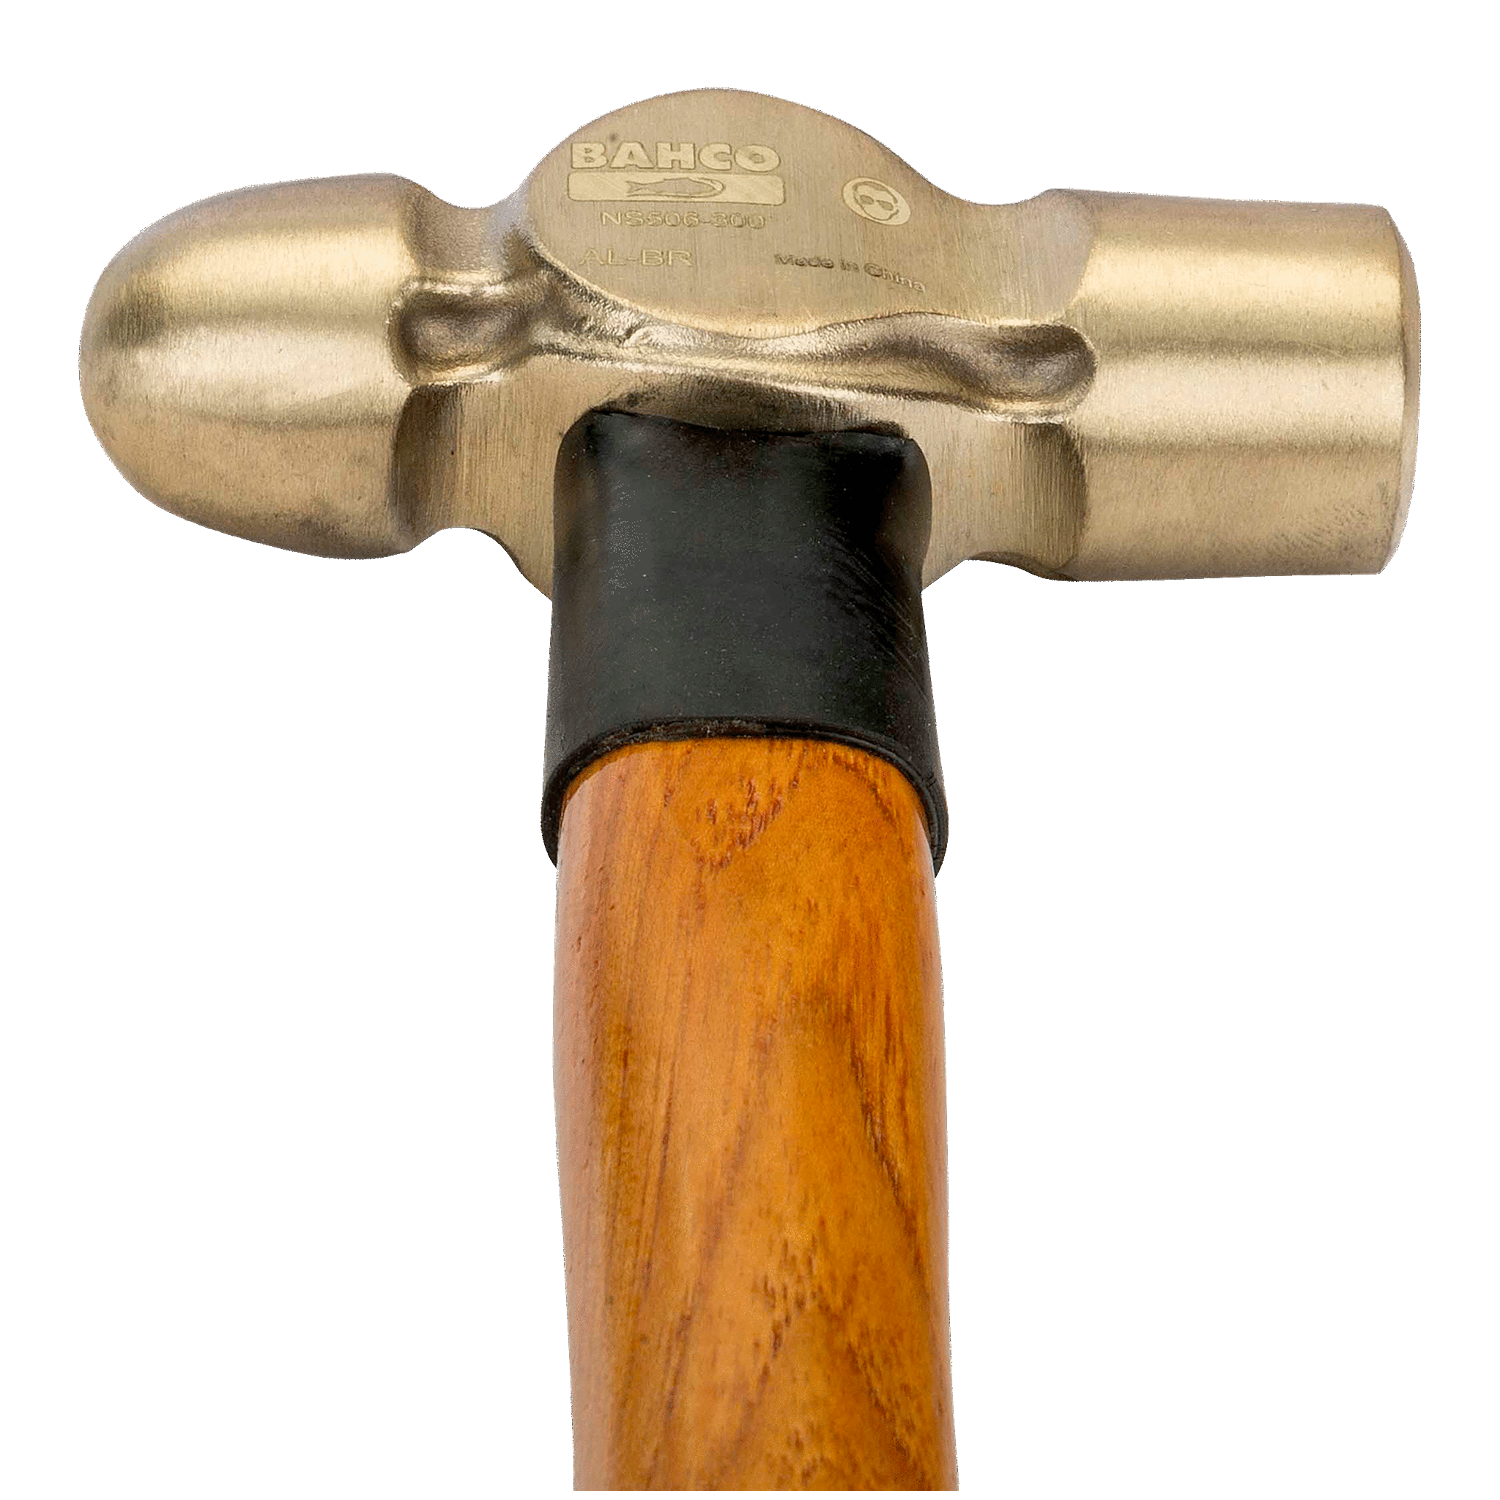 BAHCO NS506 Ball Pein Hammer with Aluminium Bronze Head - Premium Ball Pein Hammer from BAHCO - Shop now at Yew Aik.